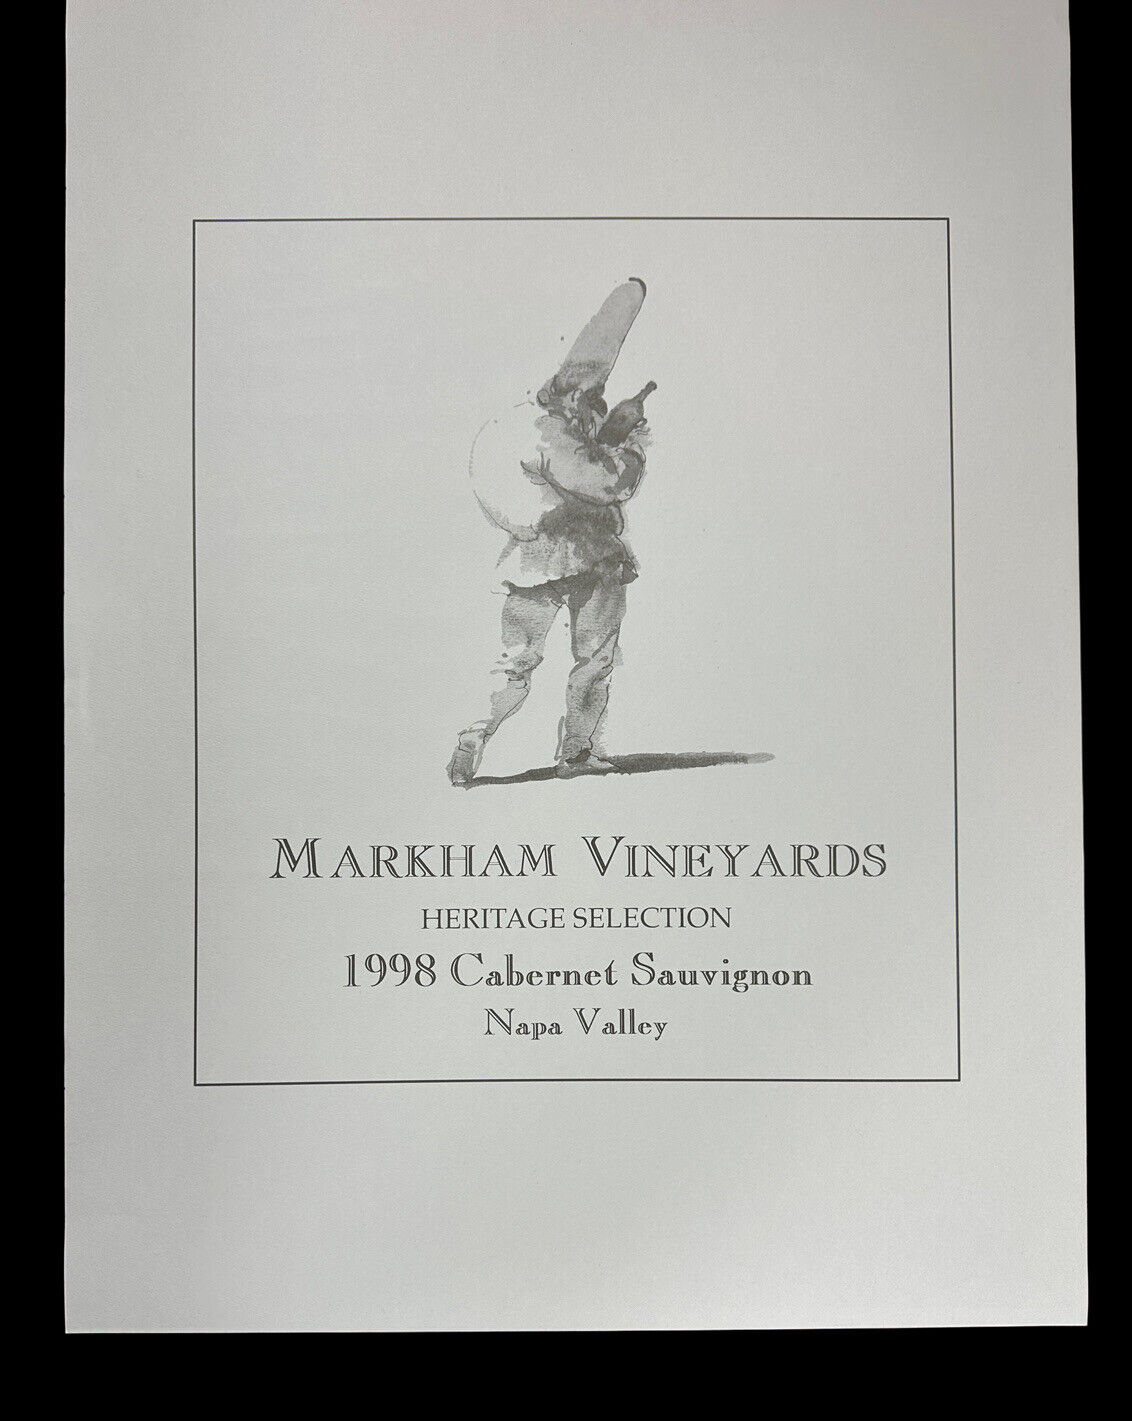 Vintage Markham Vineyards Heritage Collection 1998 Cabernet Sauvignon Ad/Poster